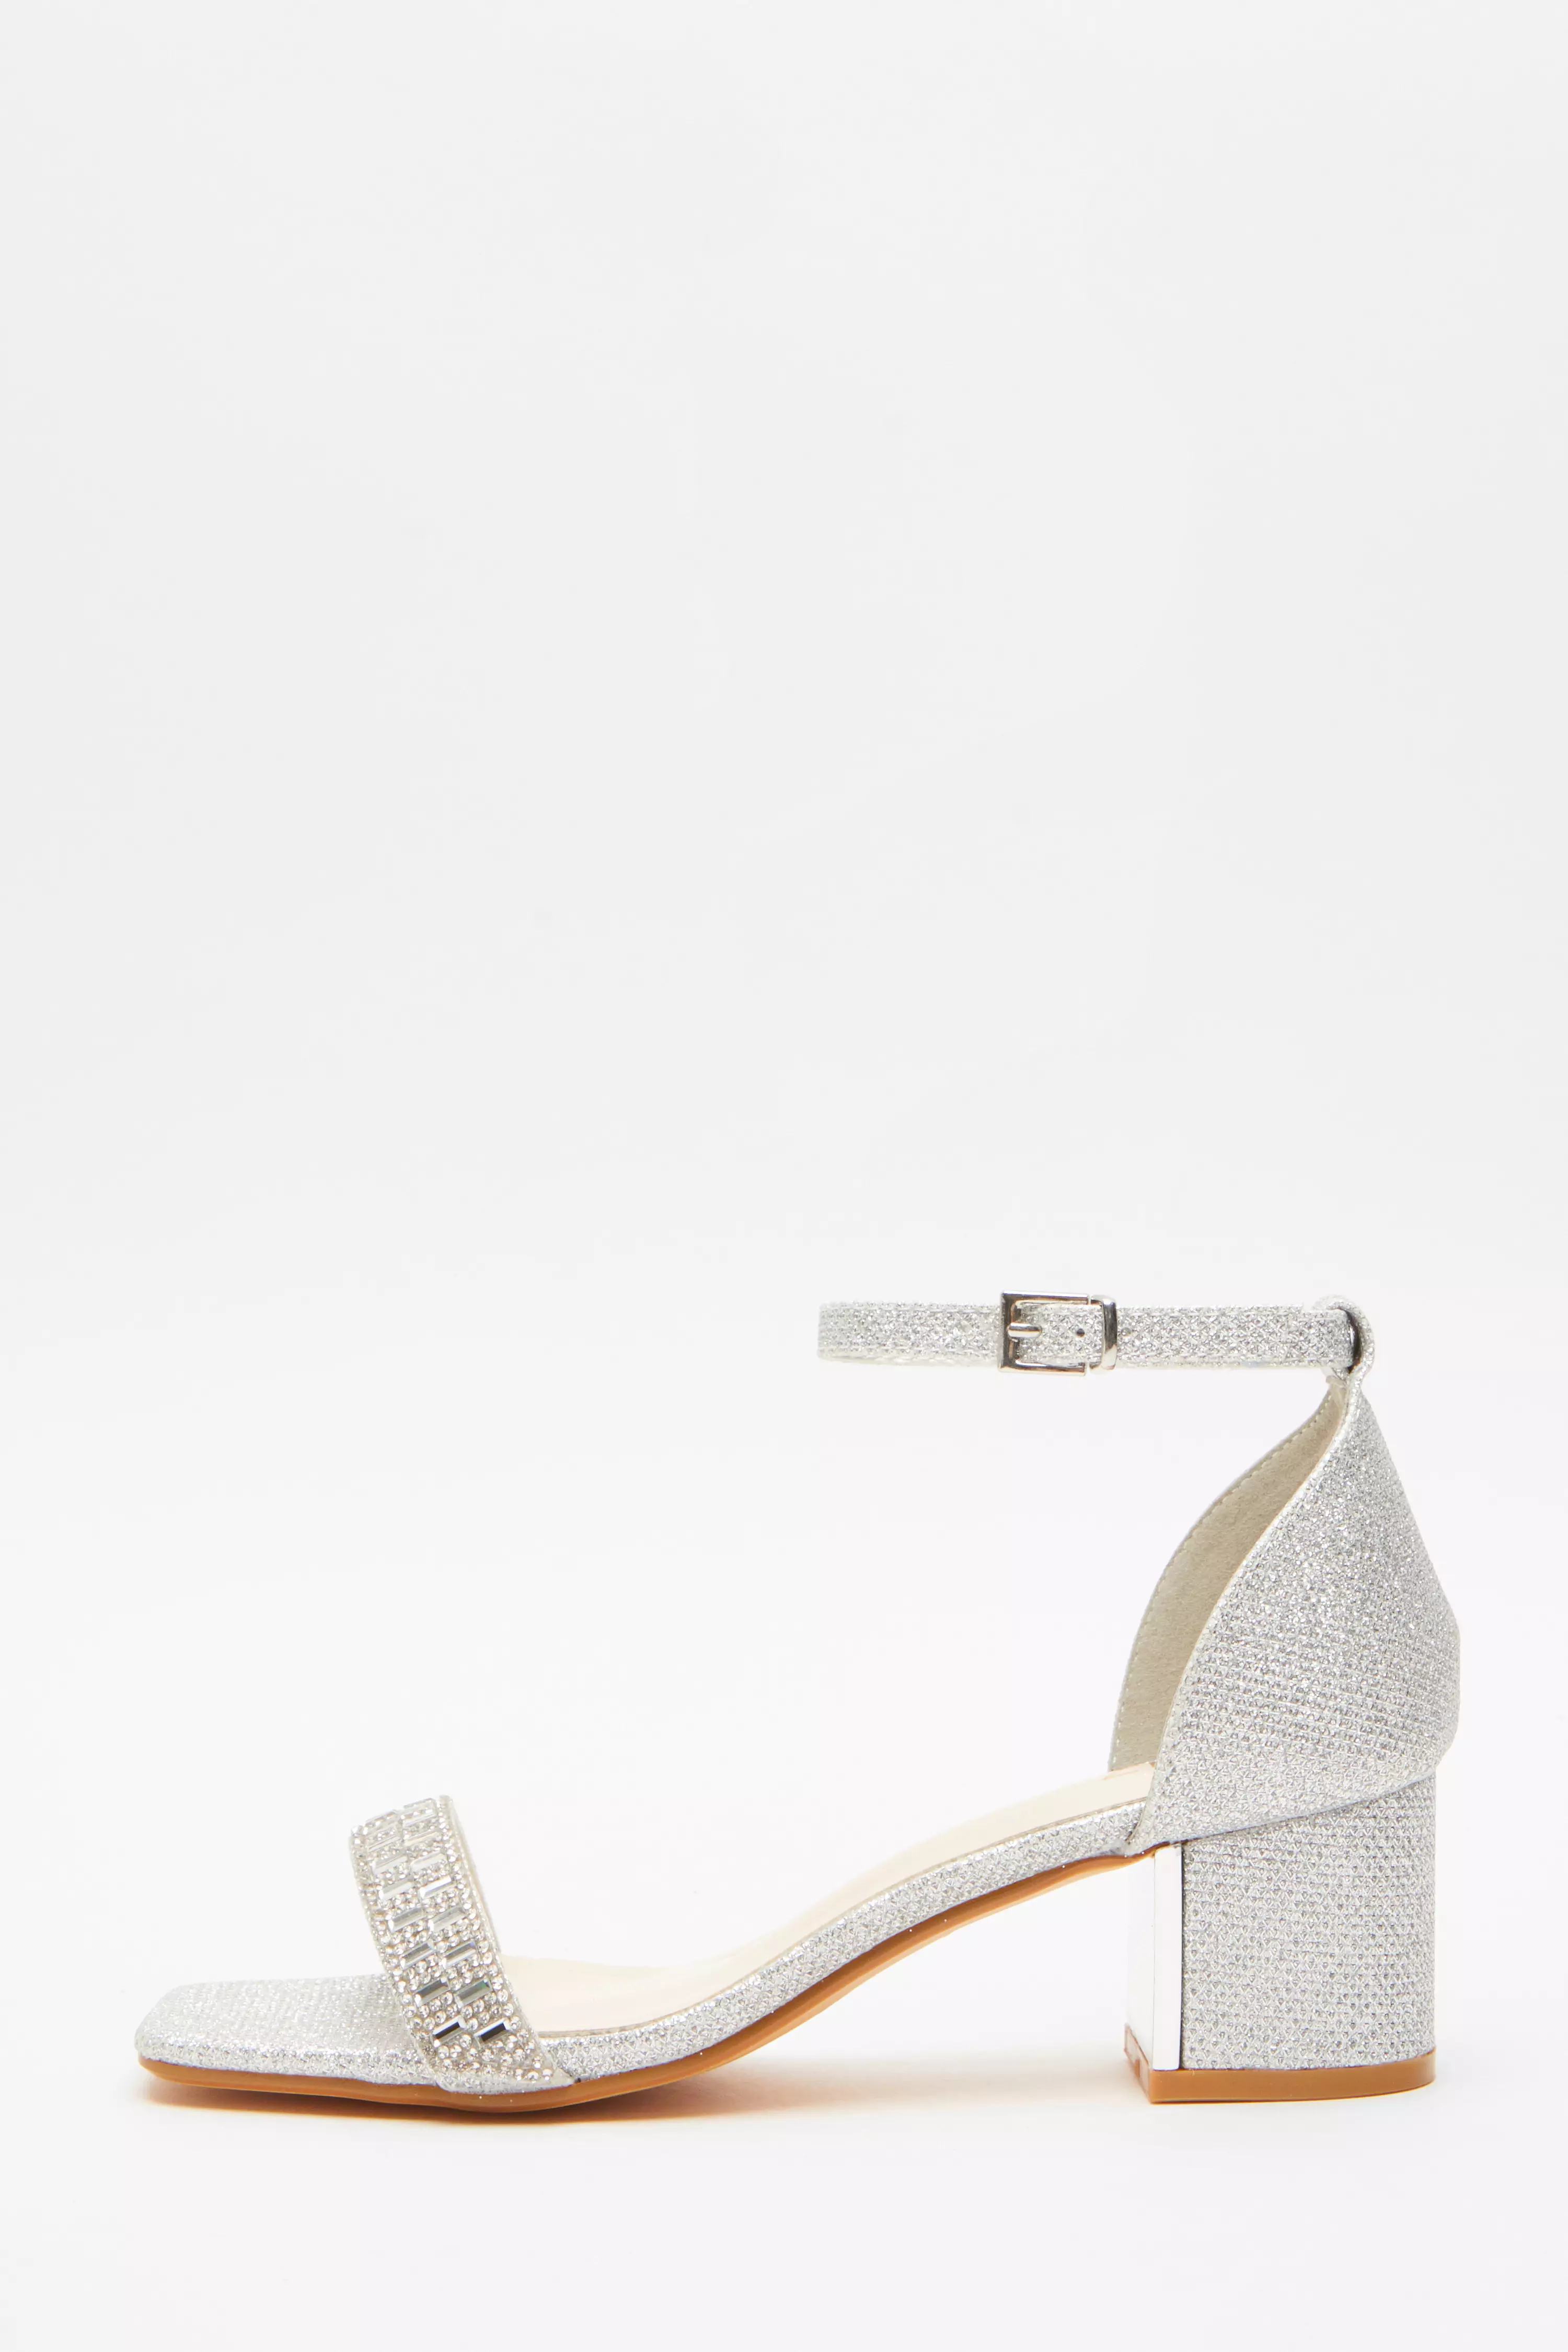 Silver Shimmer Low Block Heel Sandals - QUIZ Clothing